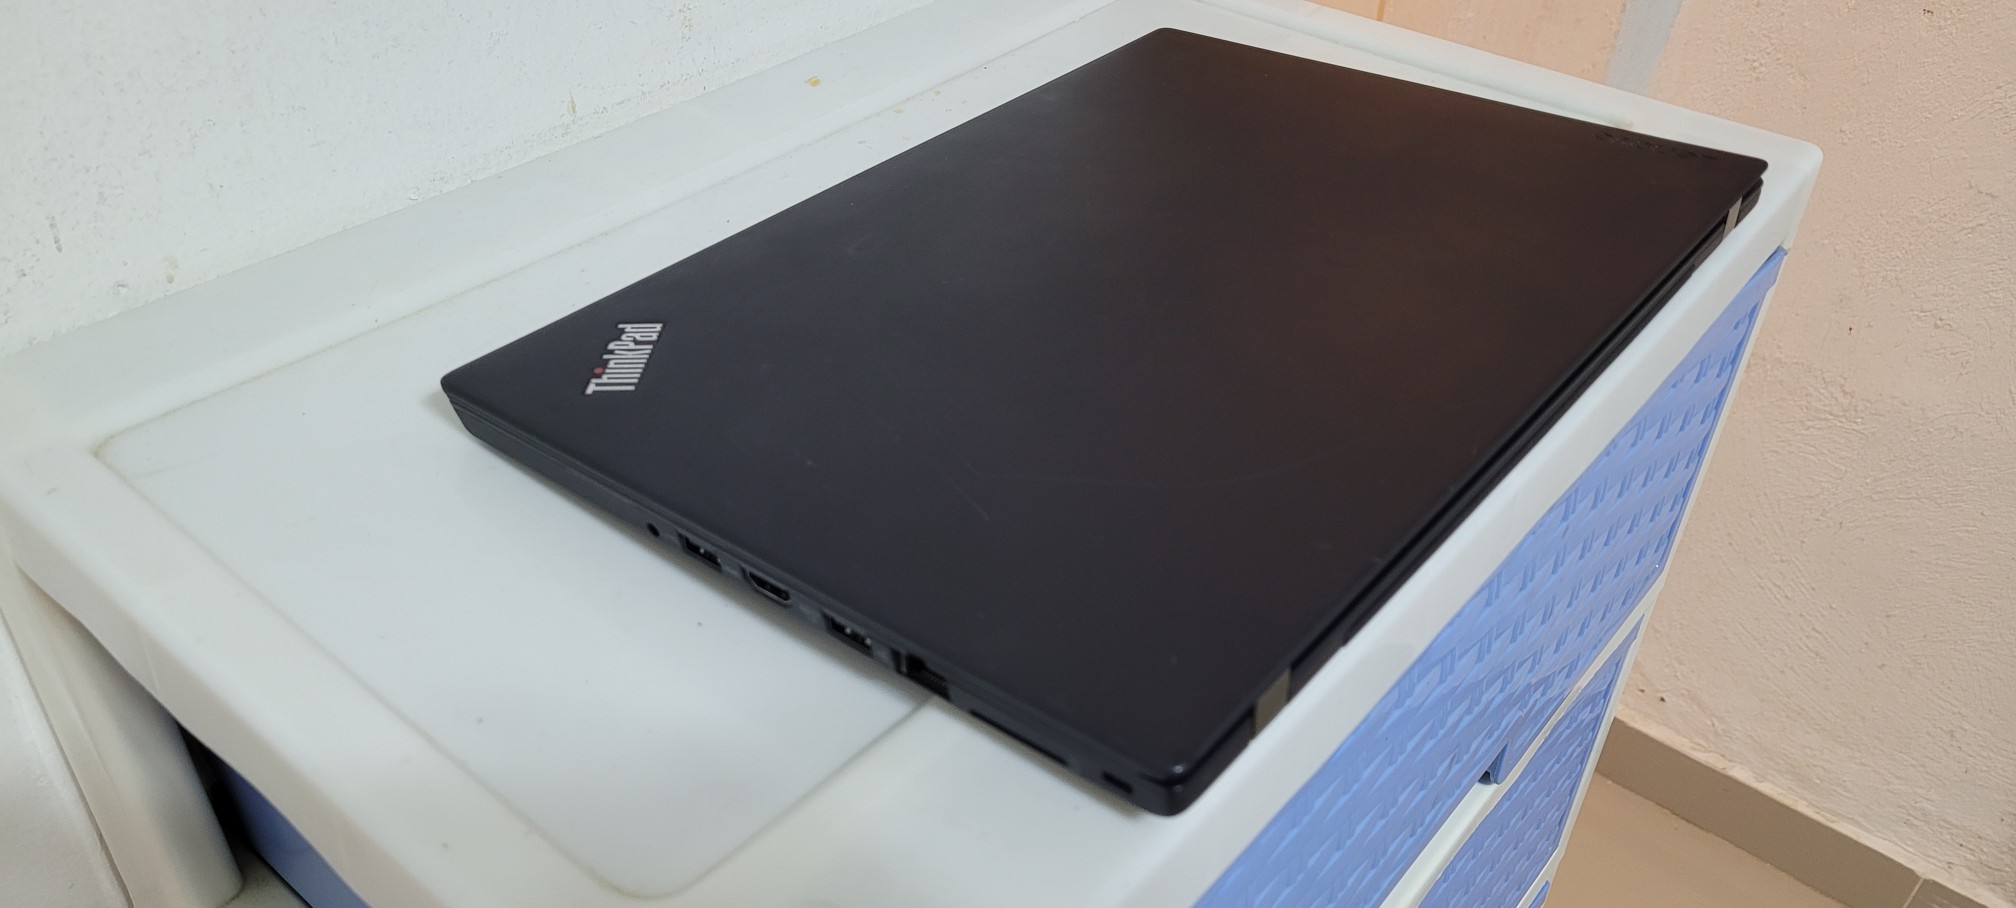 computadoras y laptops - laptop lenovo 14 Pulg Core i7 2.4ghz Ram 8gb Disco 256gb SSD Solido hdmi 2